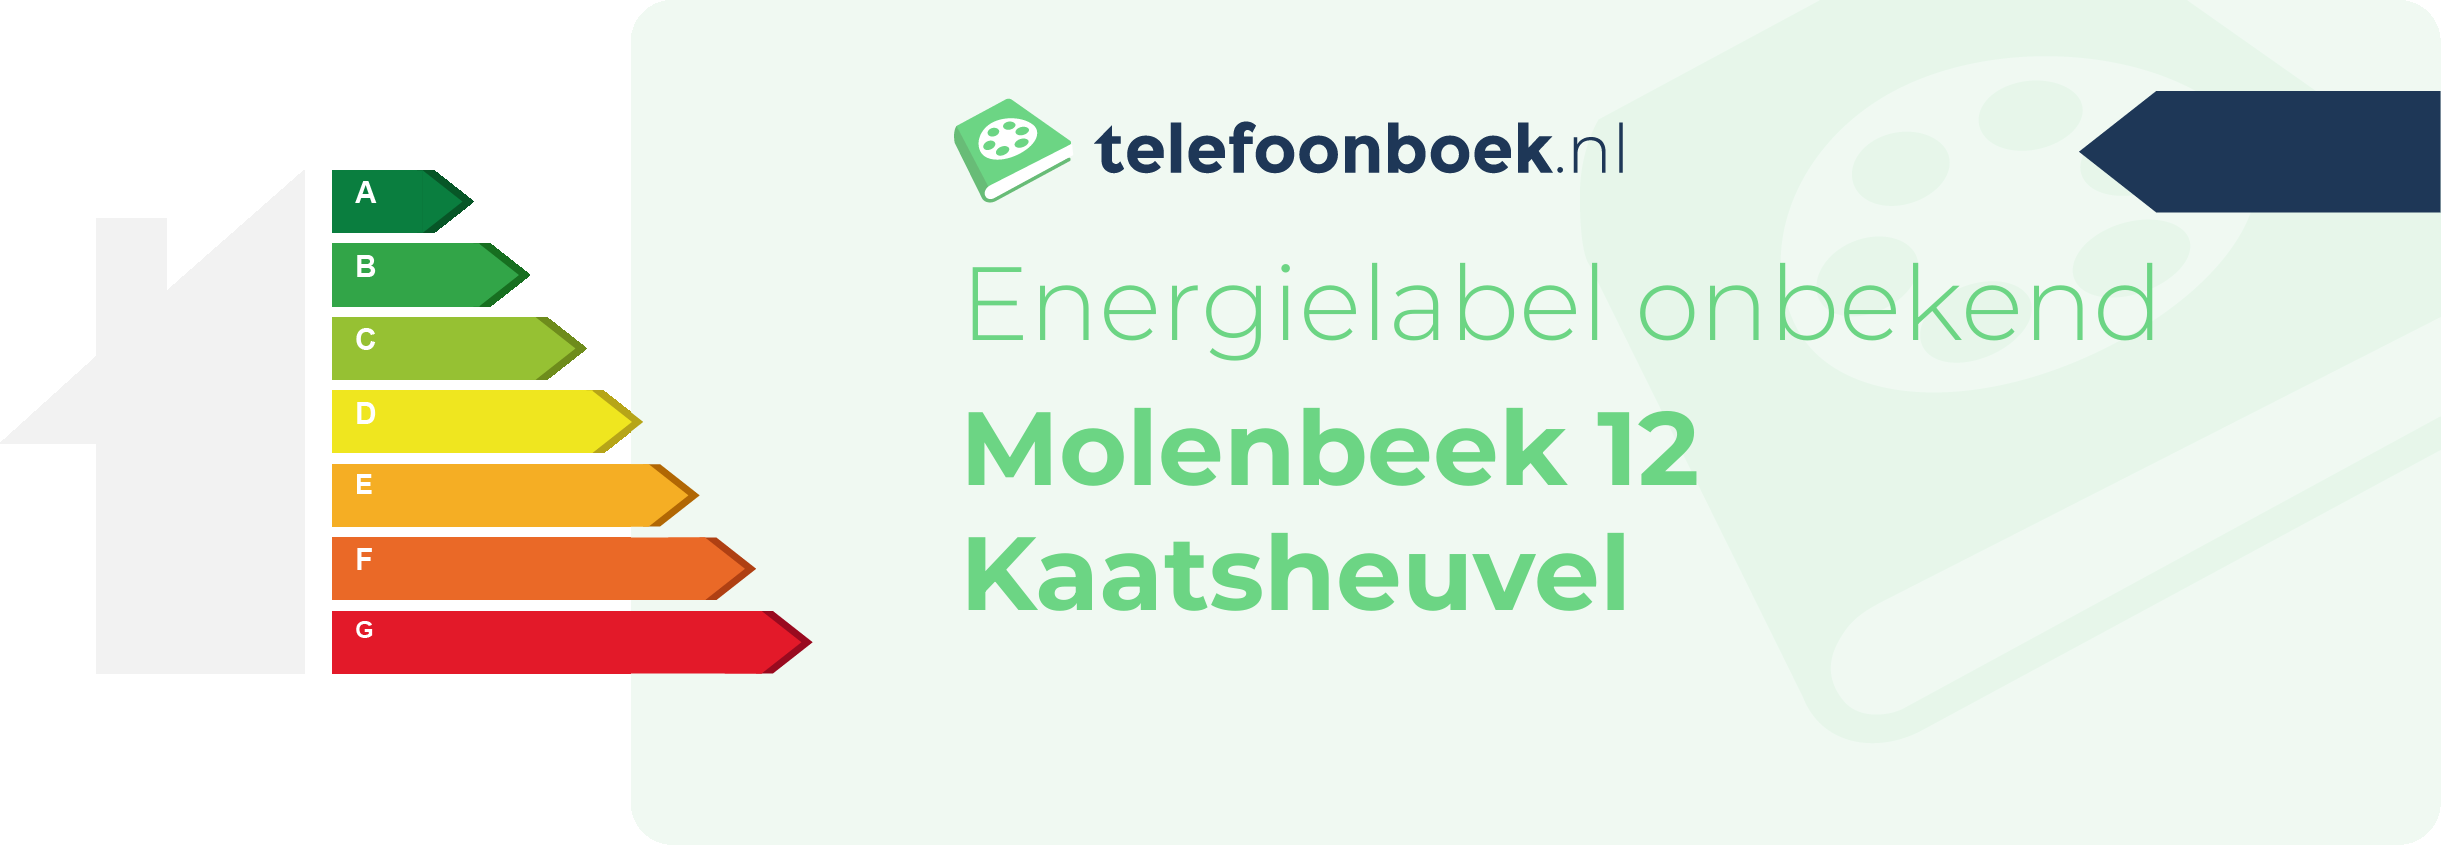 Energielabel Molenbeek 12 Kaatsheuvel